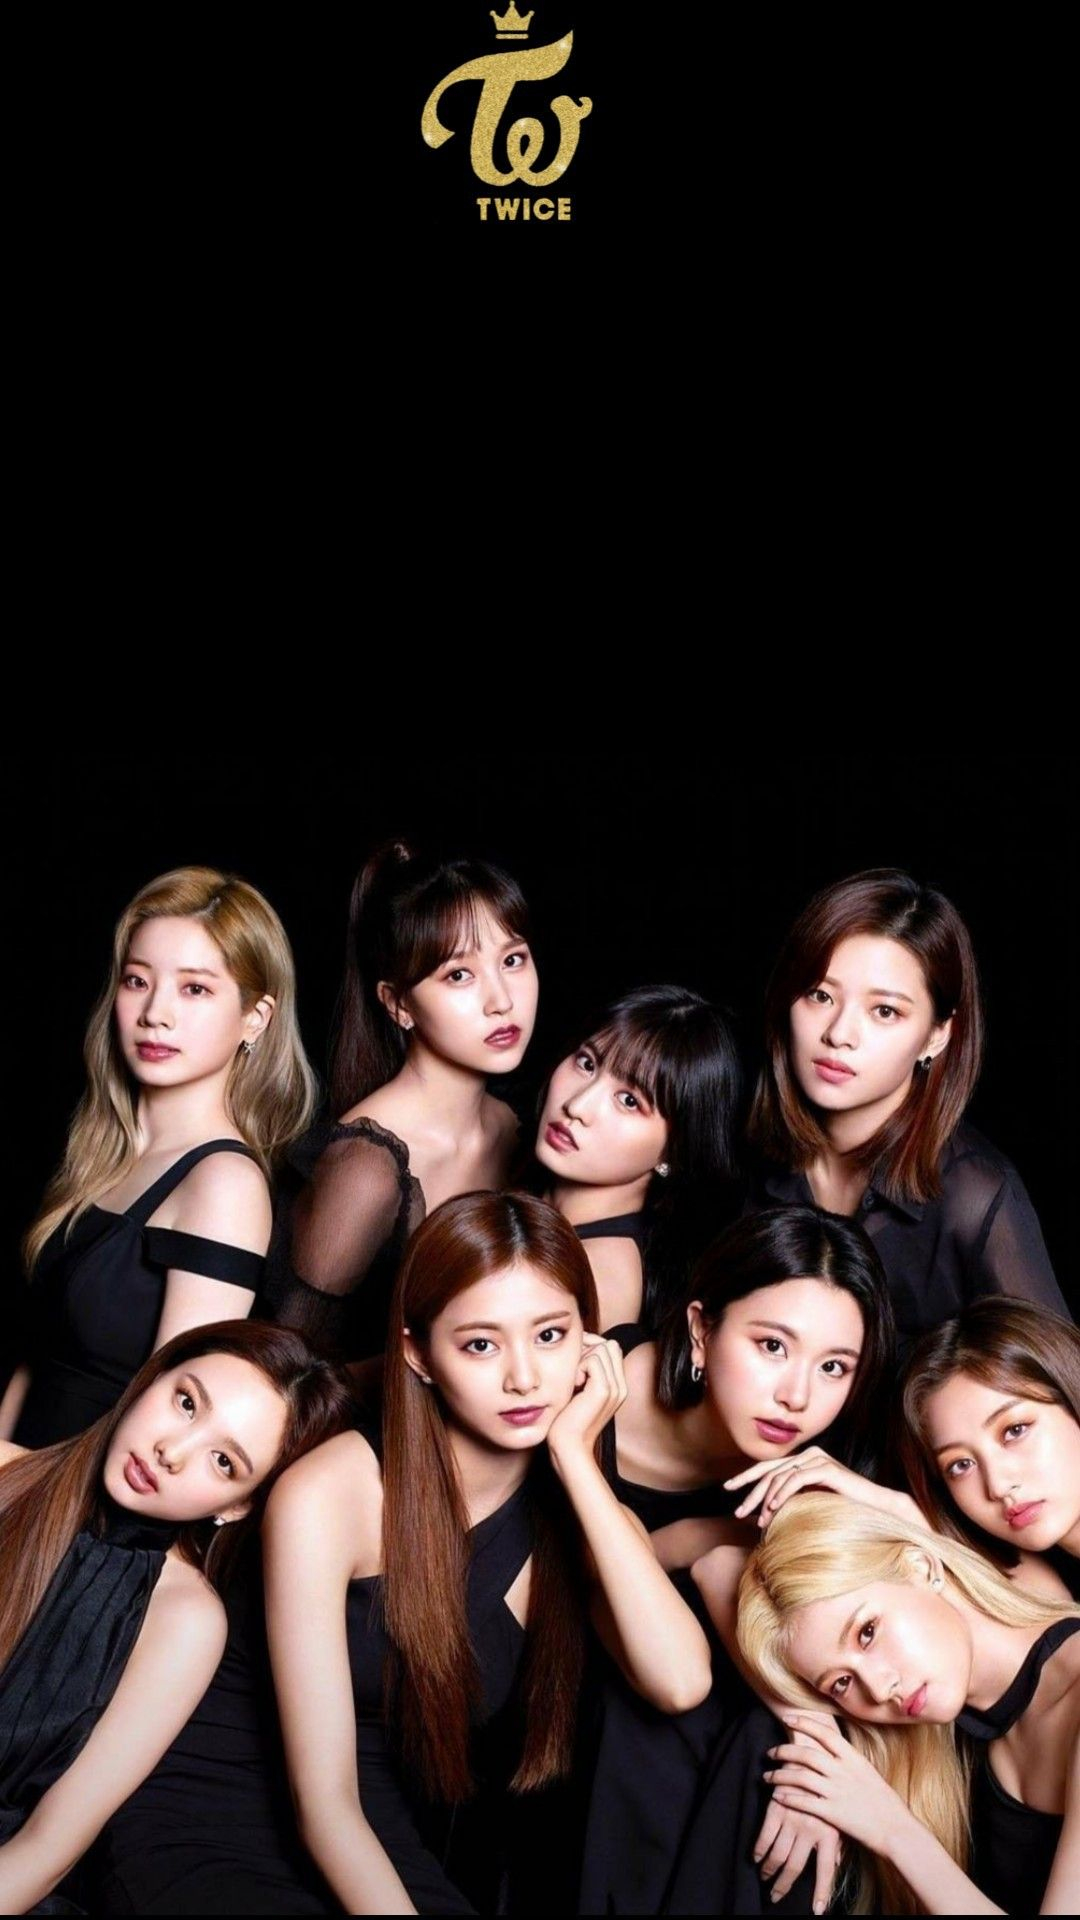 1080x1920 TWICE WALLPAPER | Kpop girl groups, Twice, Kpop wallpaper